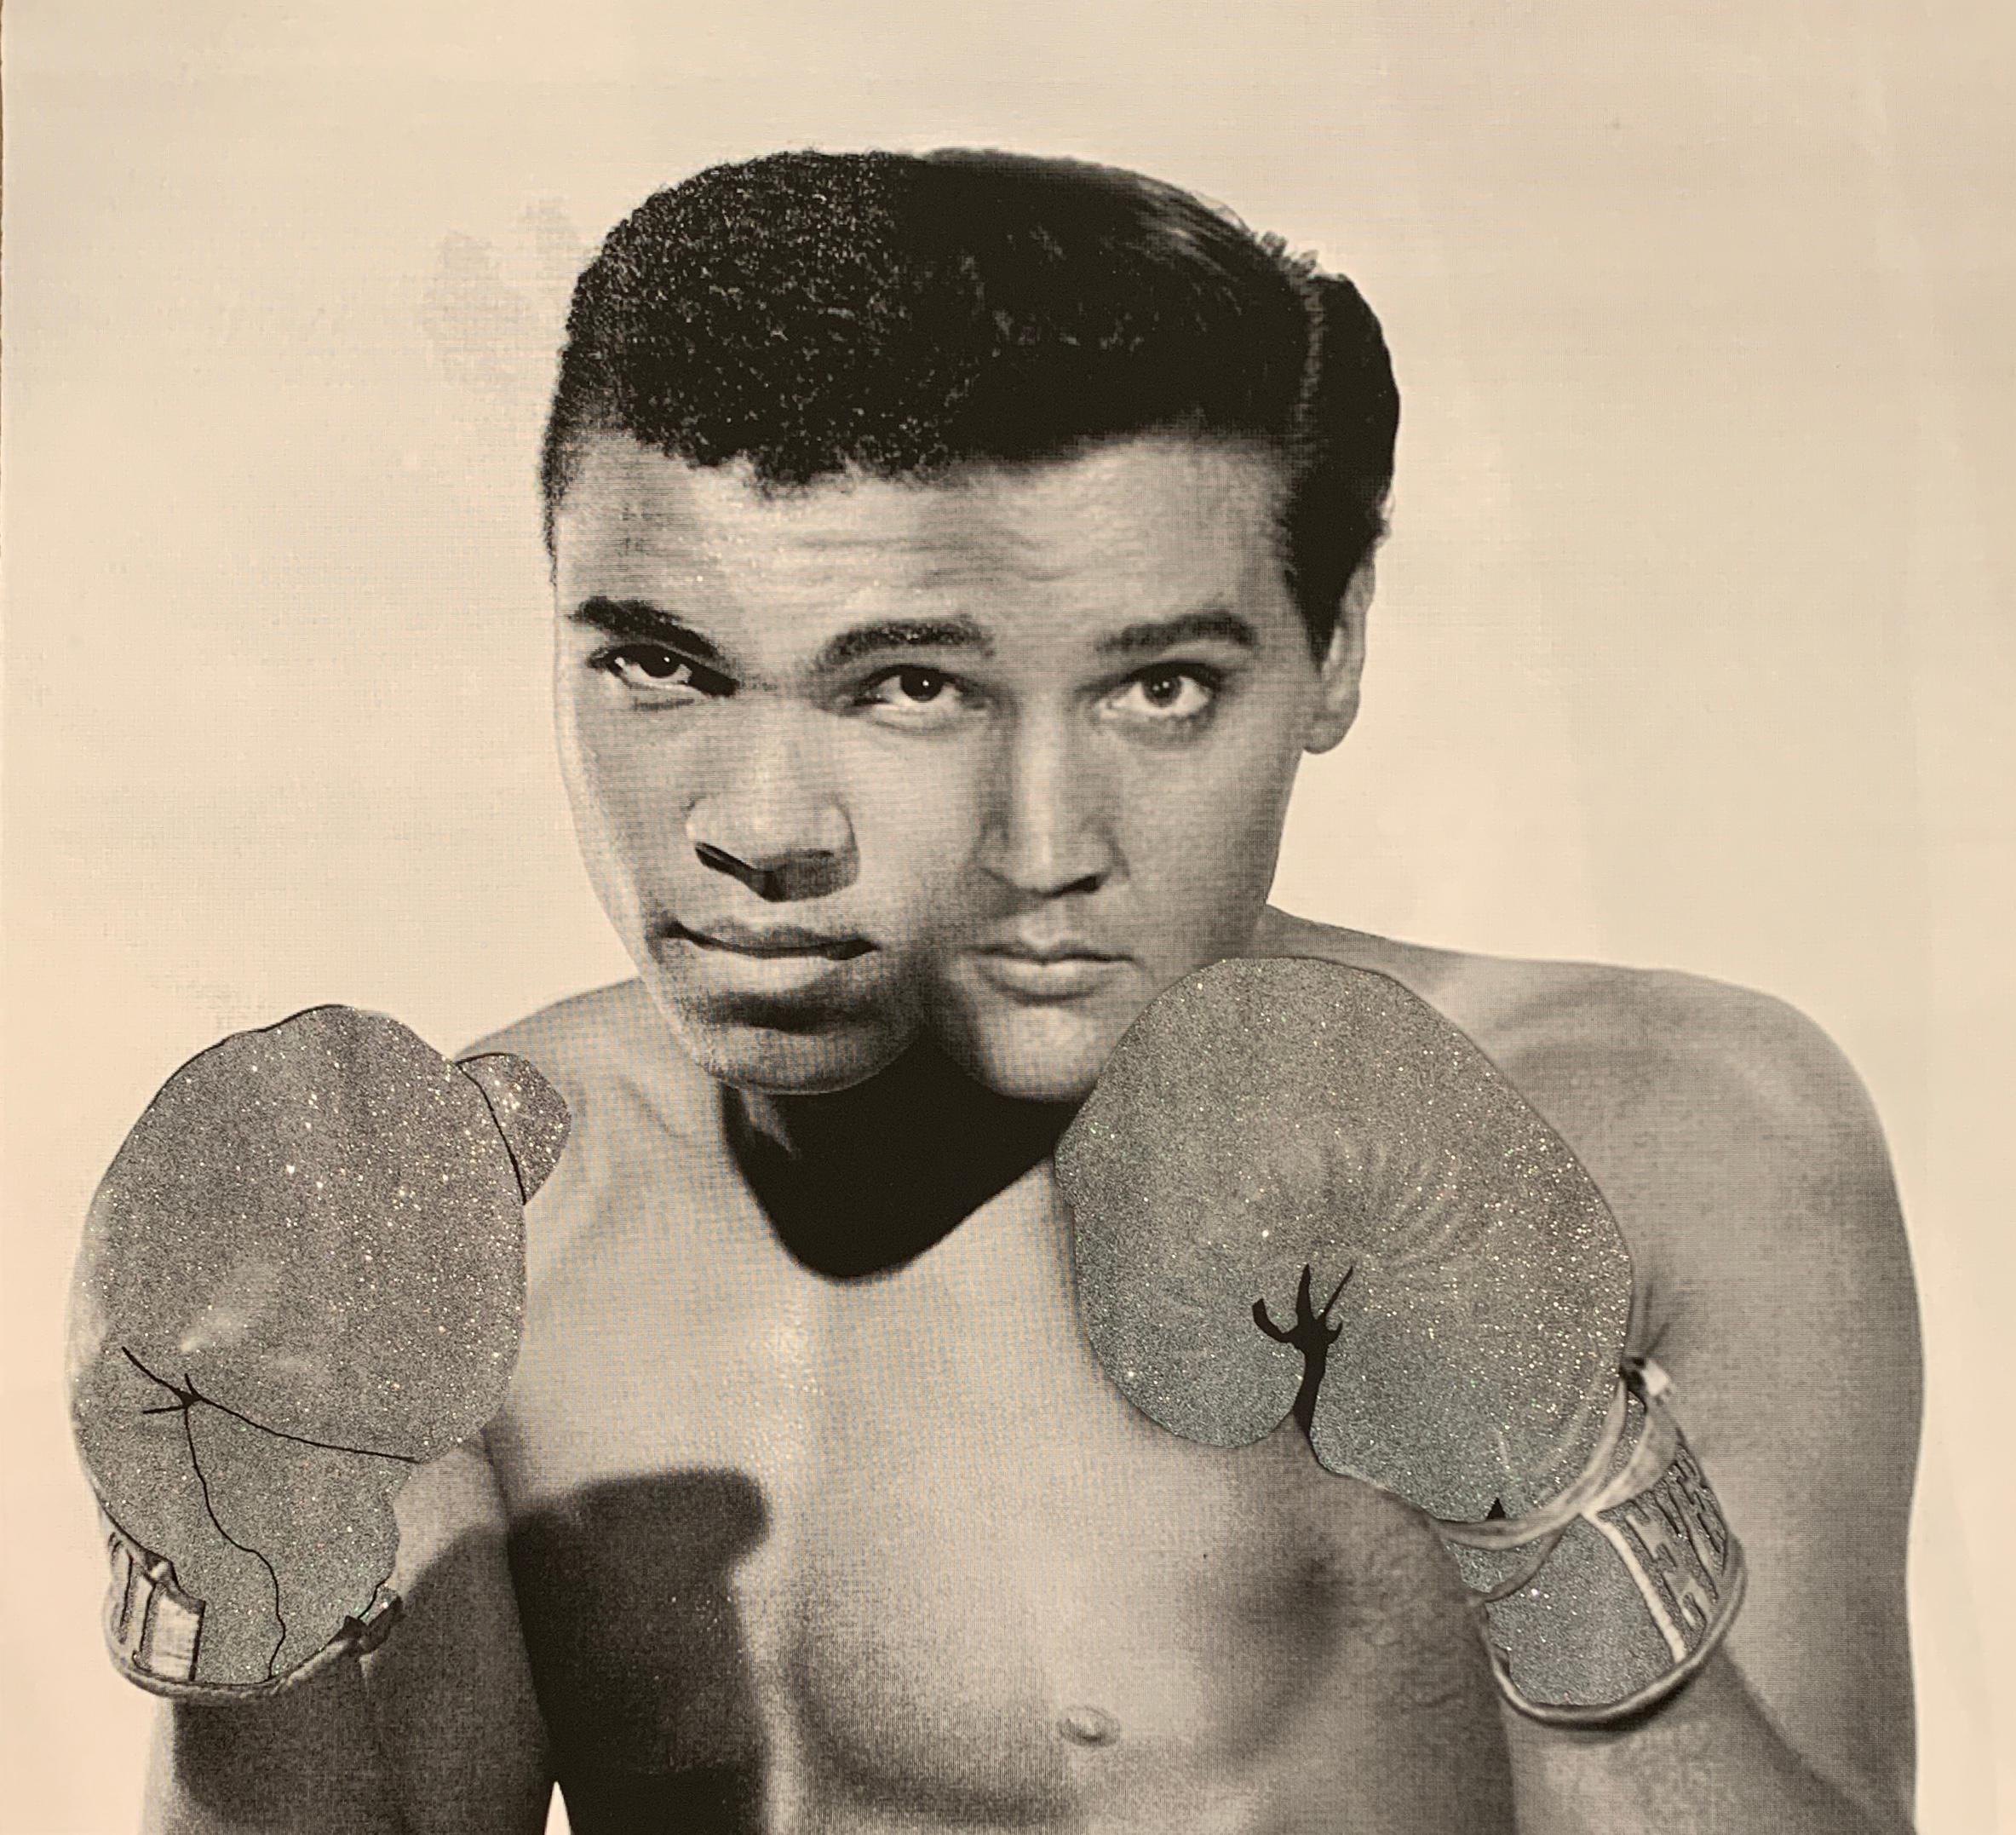 House of Orion Portrait Photograph - The Greatest Silver-Rainbow AP, Julian Prolman Elvis Mohammed Ali Boxing Glove